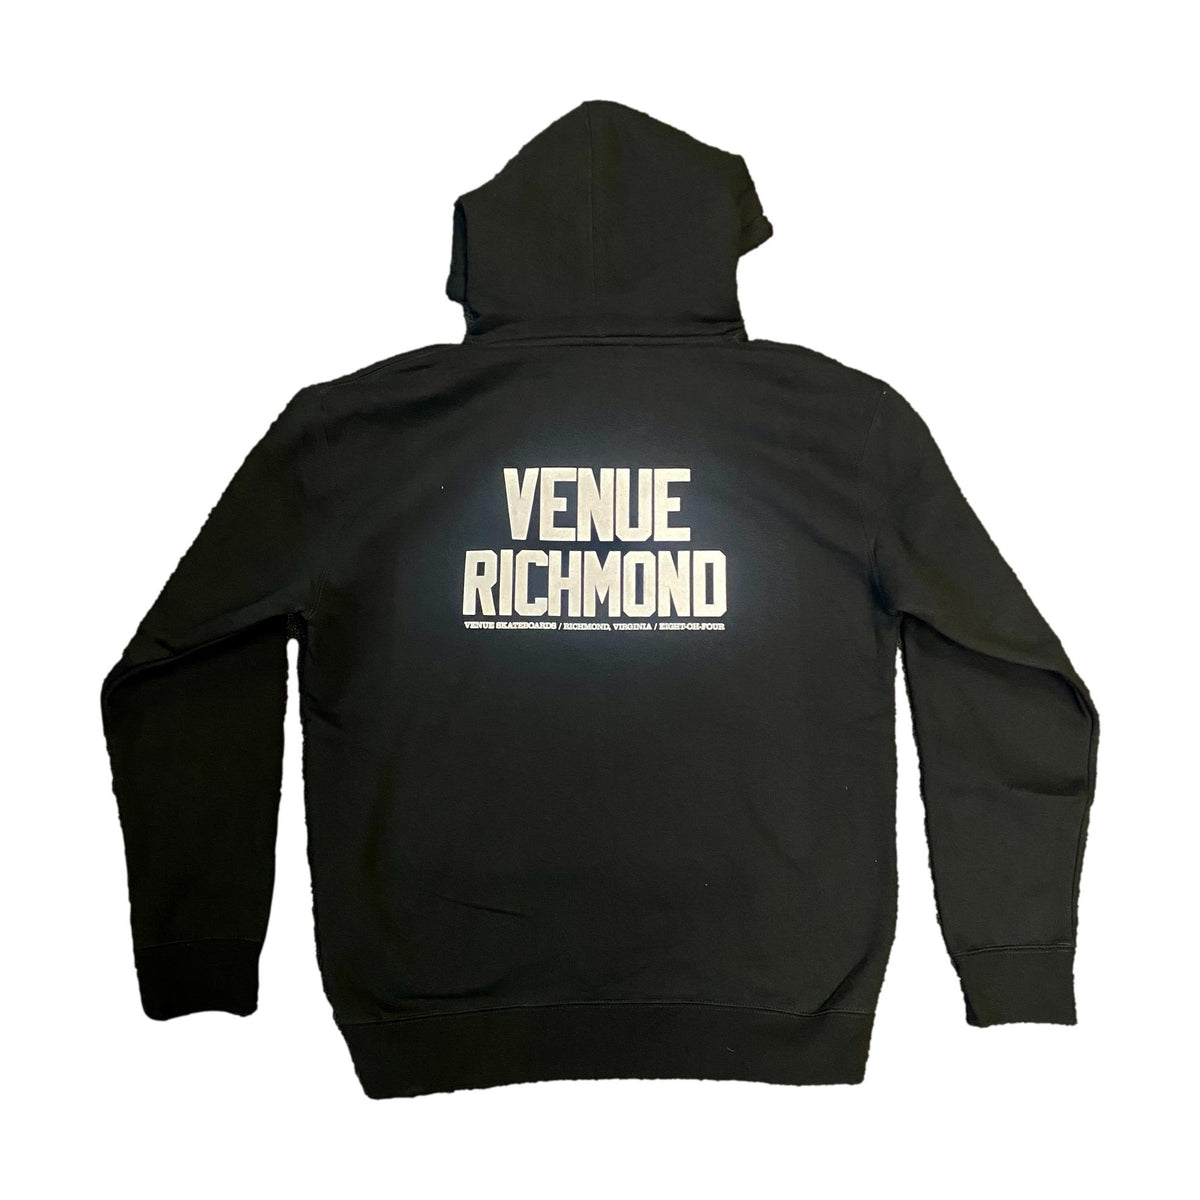 Venue Richmond Heavyweight Hooded Sweatshirt Black - Venue Skateboards